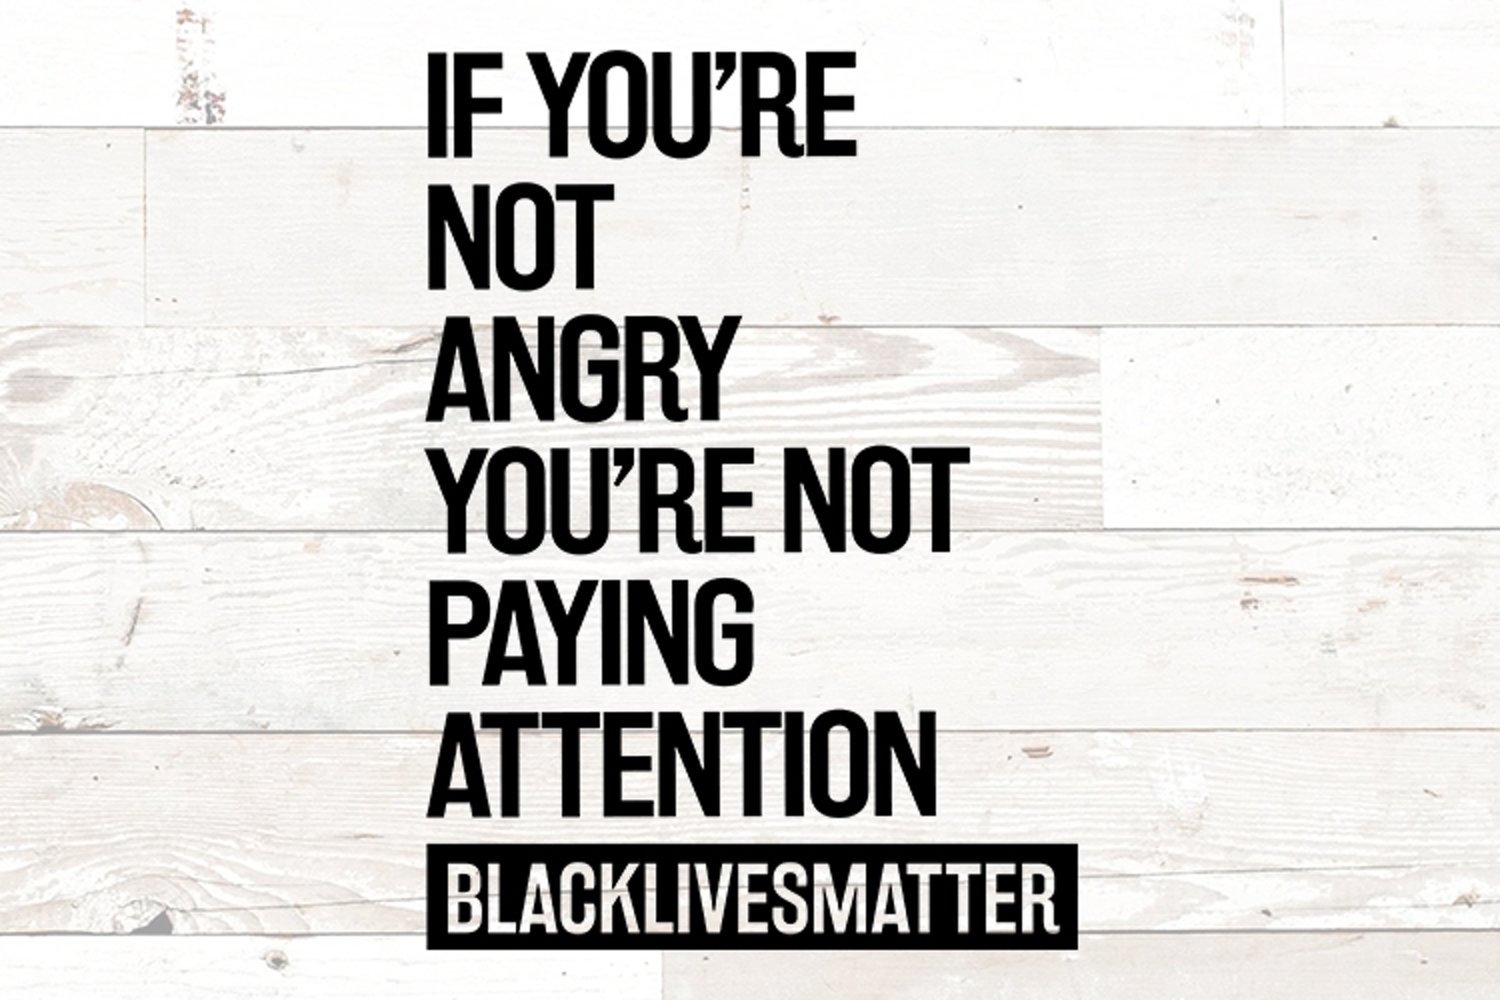 Black lives matter - quote for t-shirt design.